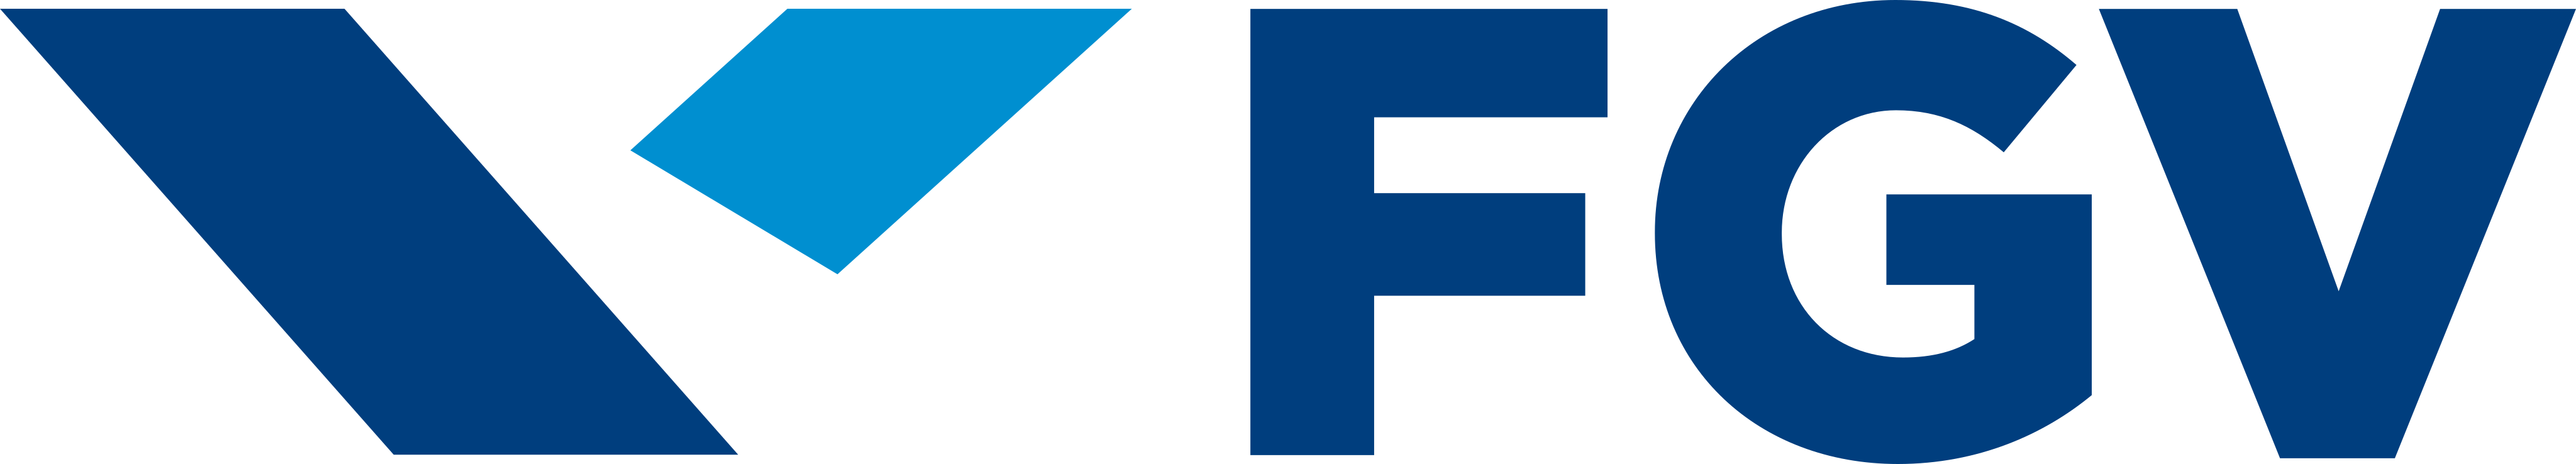 fgv-logo-1